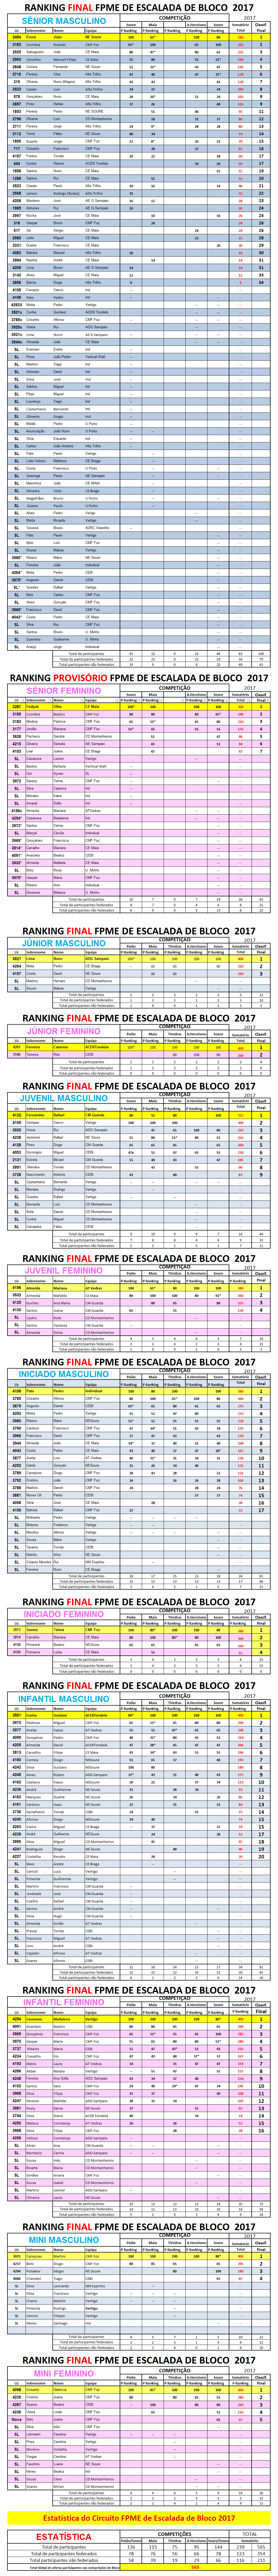 Ranking Final 2017